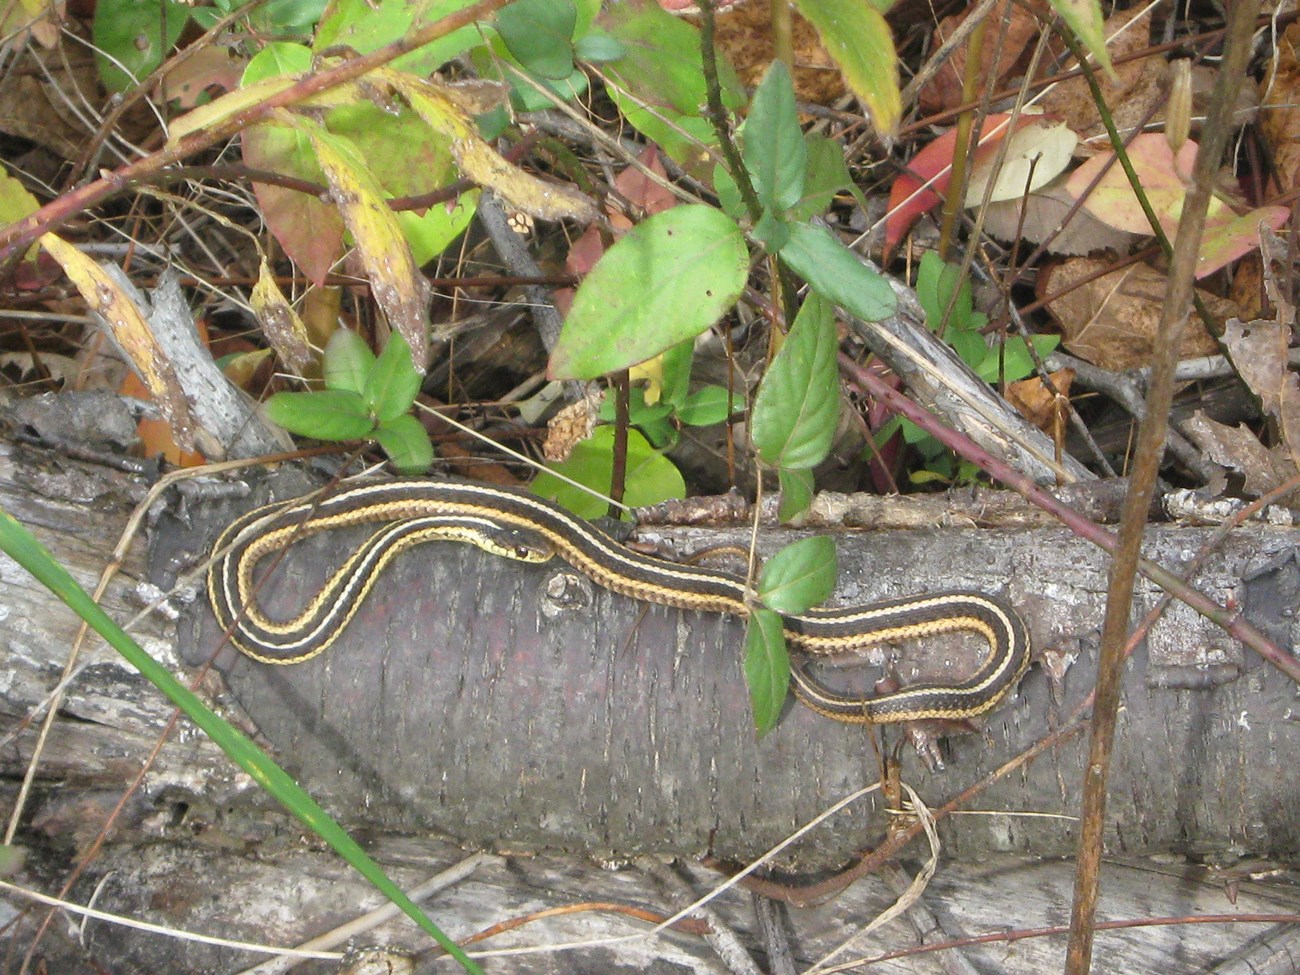 An eastern garter snake basks on a log to stay warm.